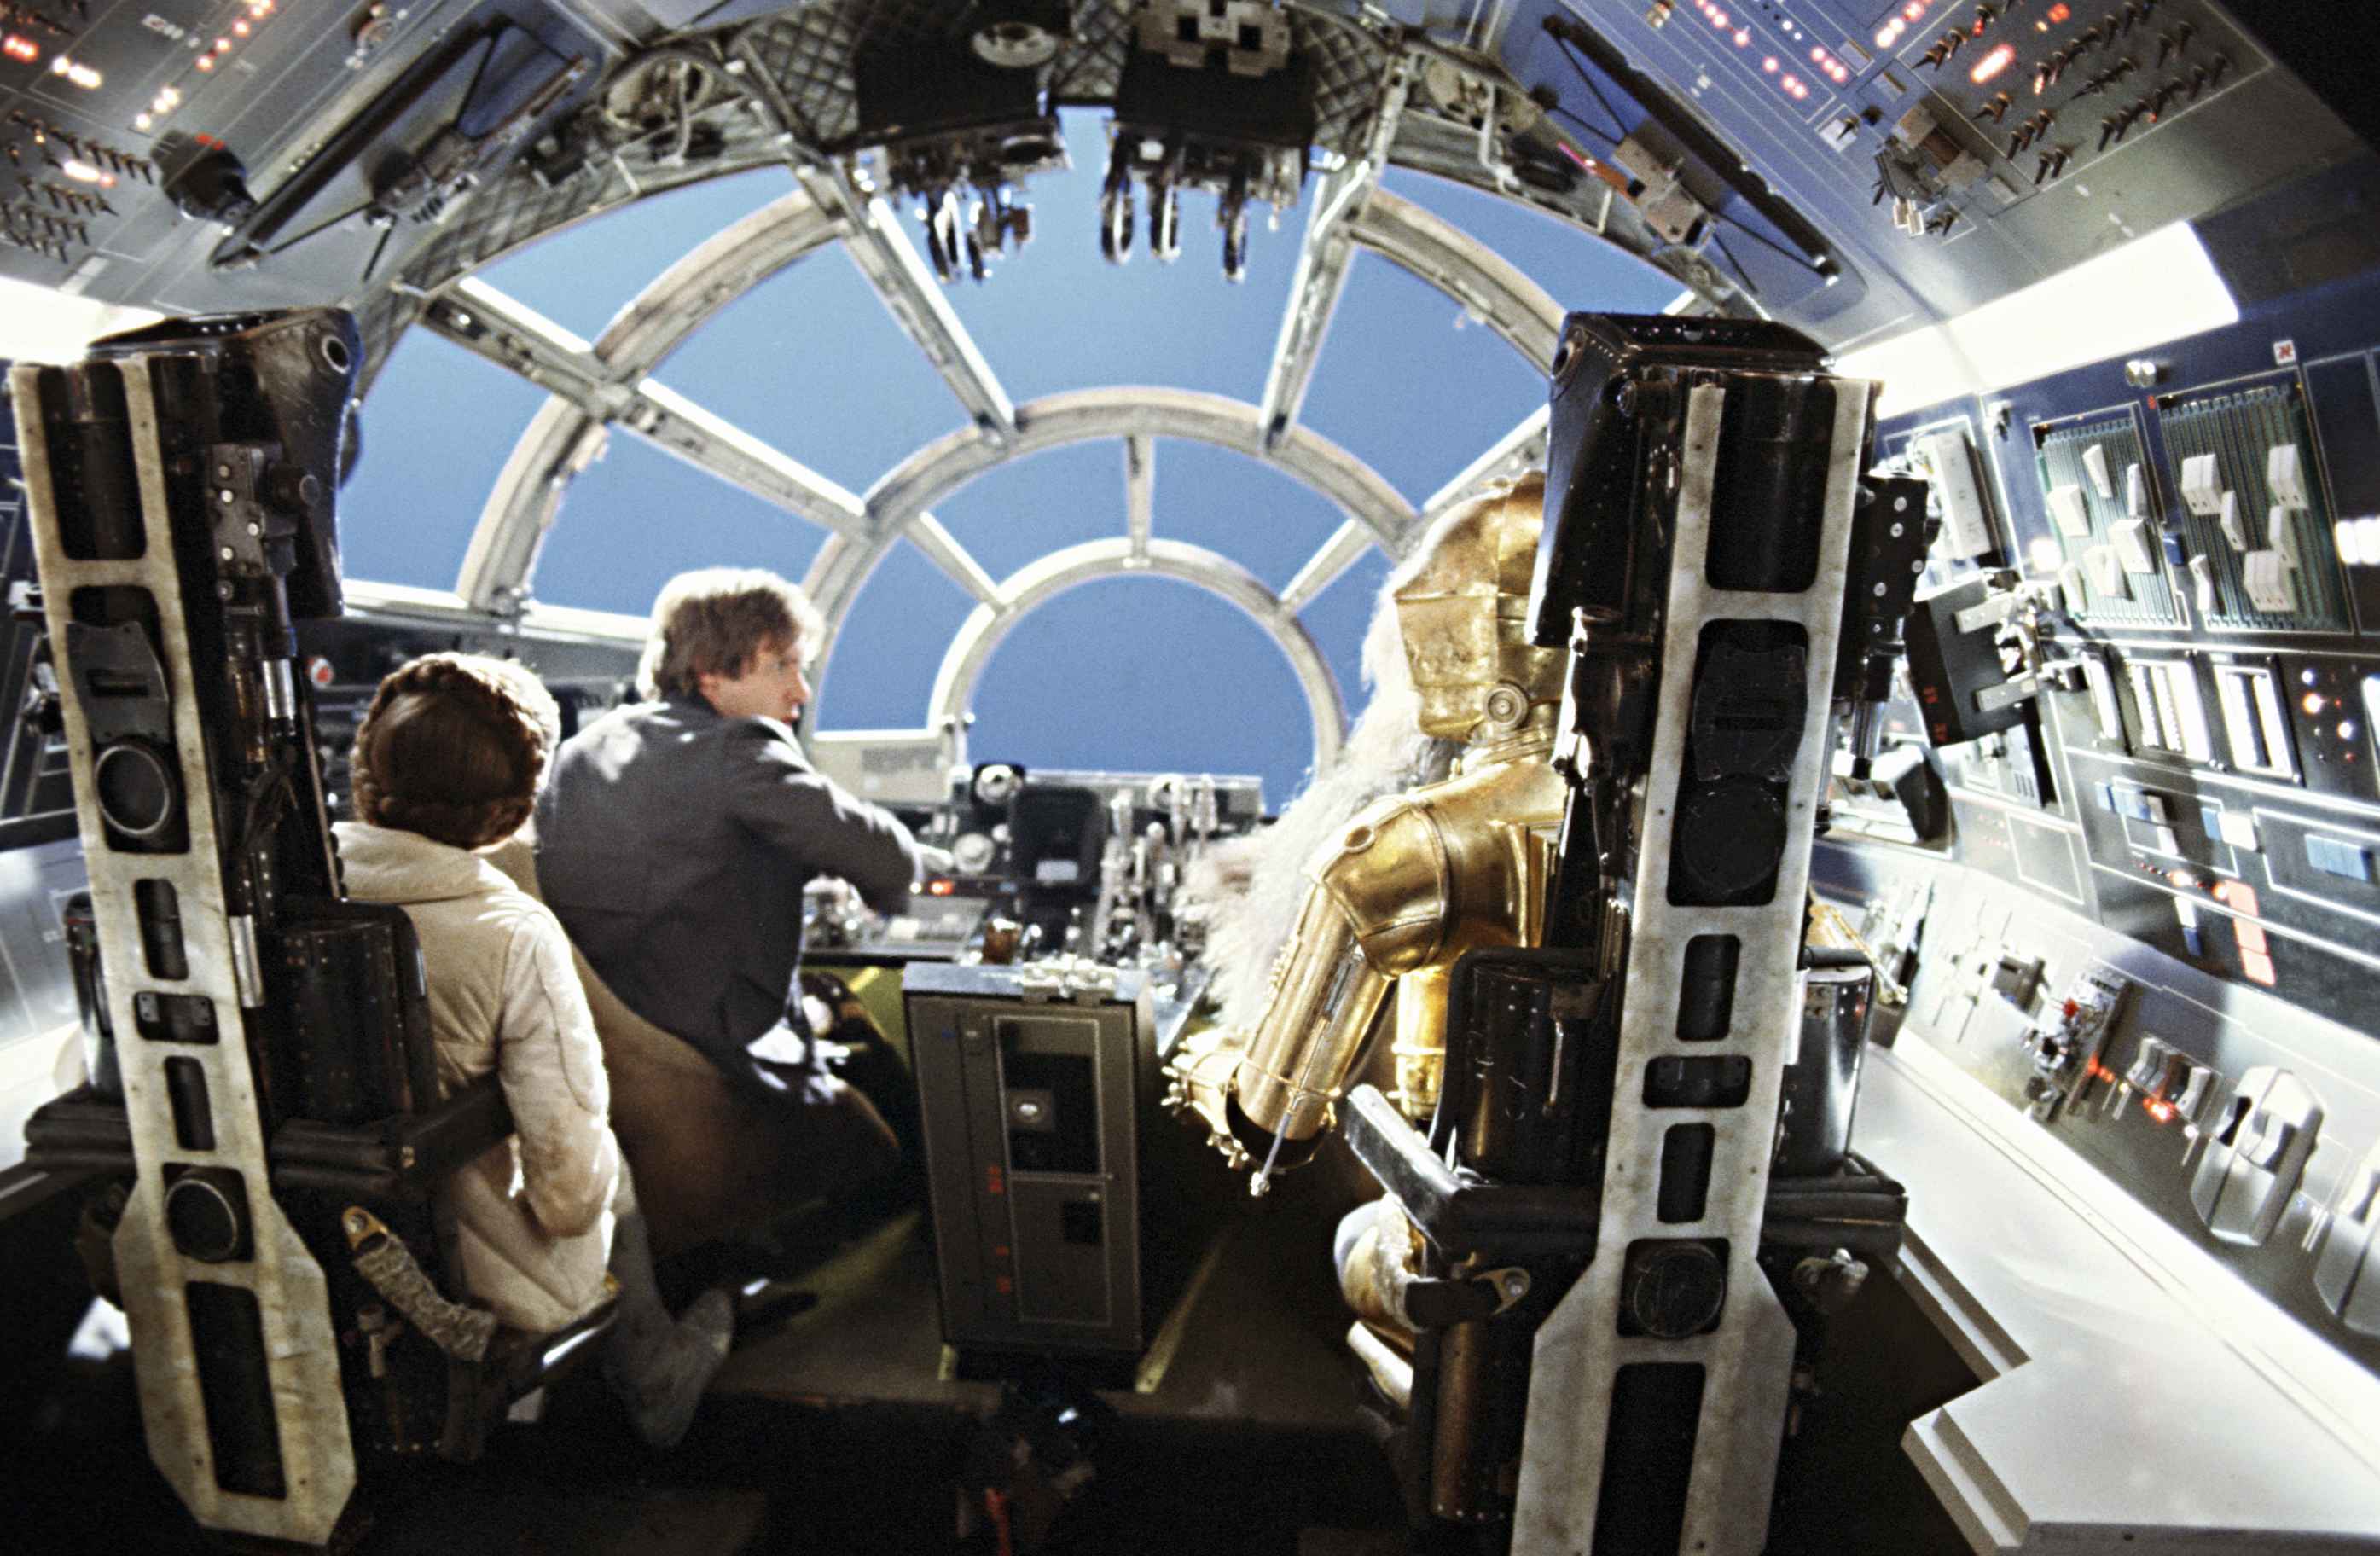 The interior of the Millennium Falcon cockpit.